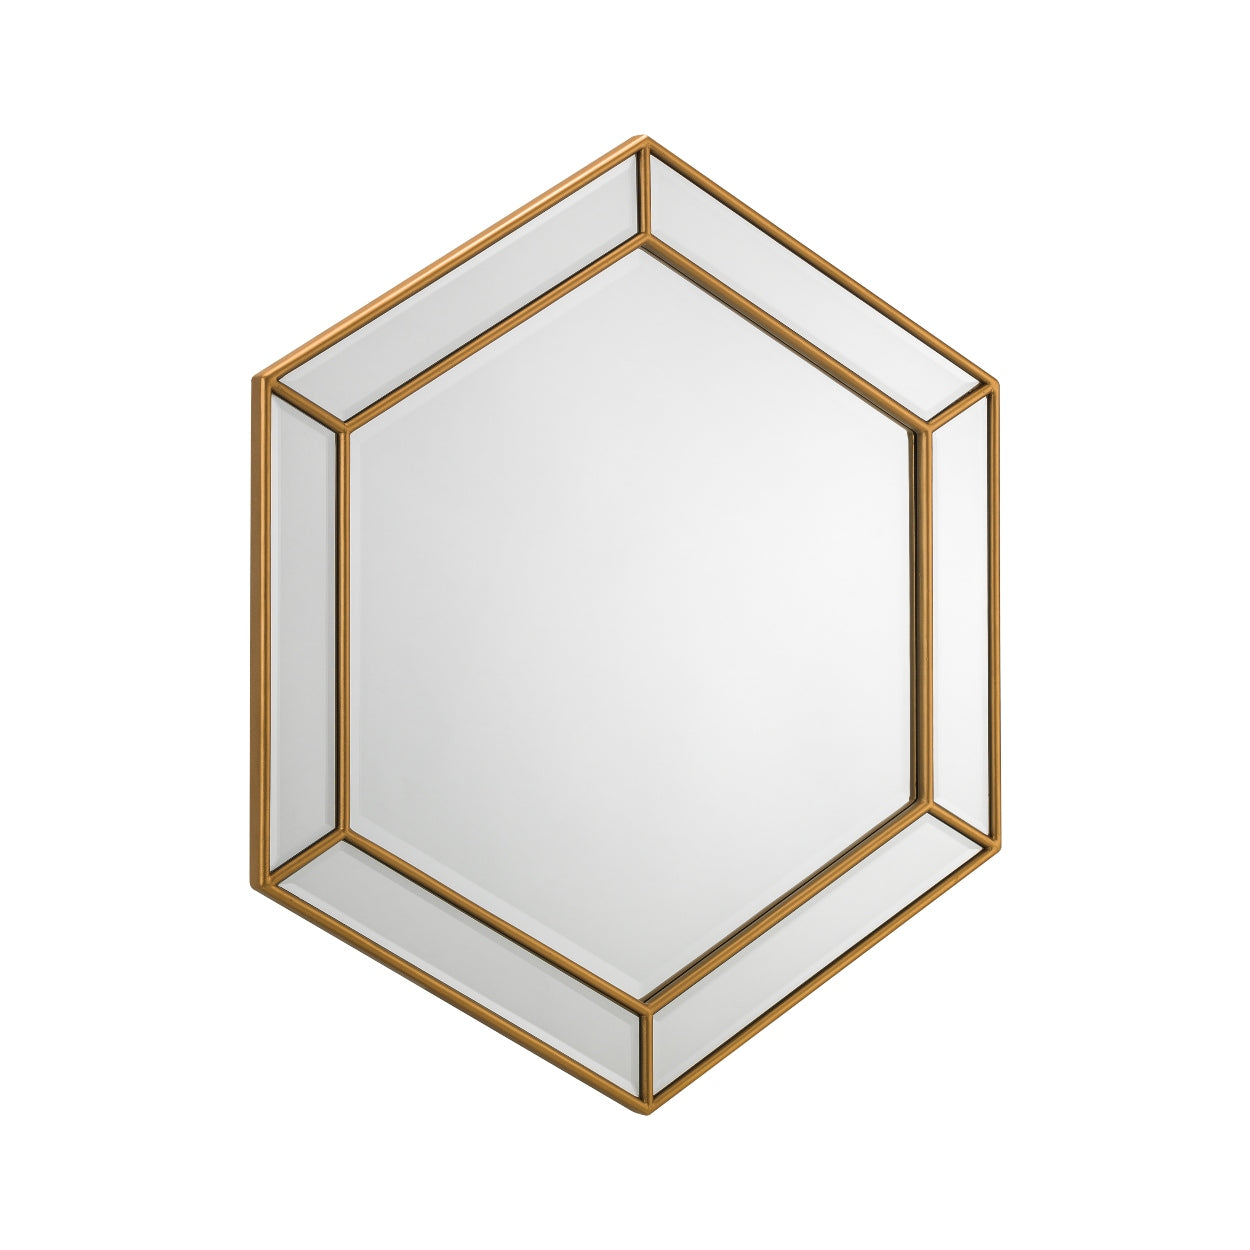 Melody Hexagonal Gold Wall Mirror